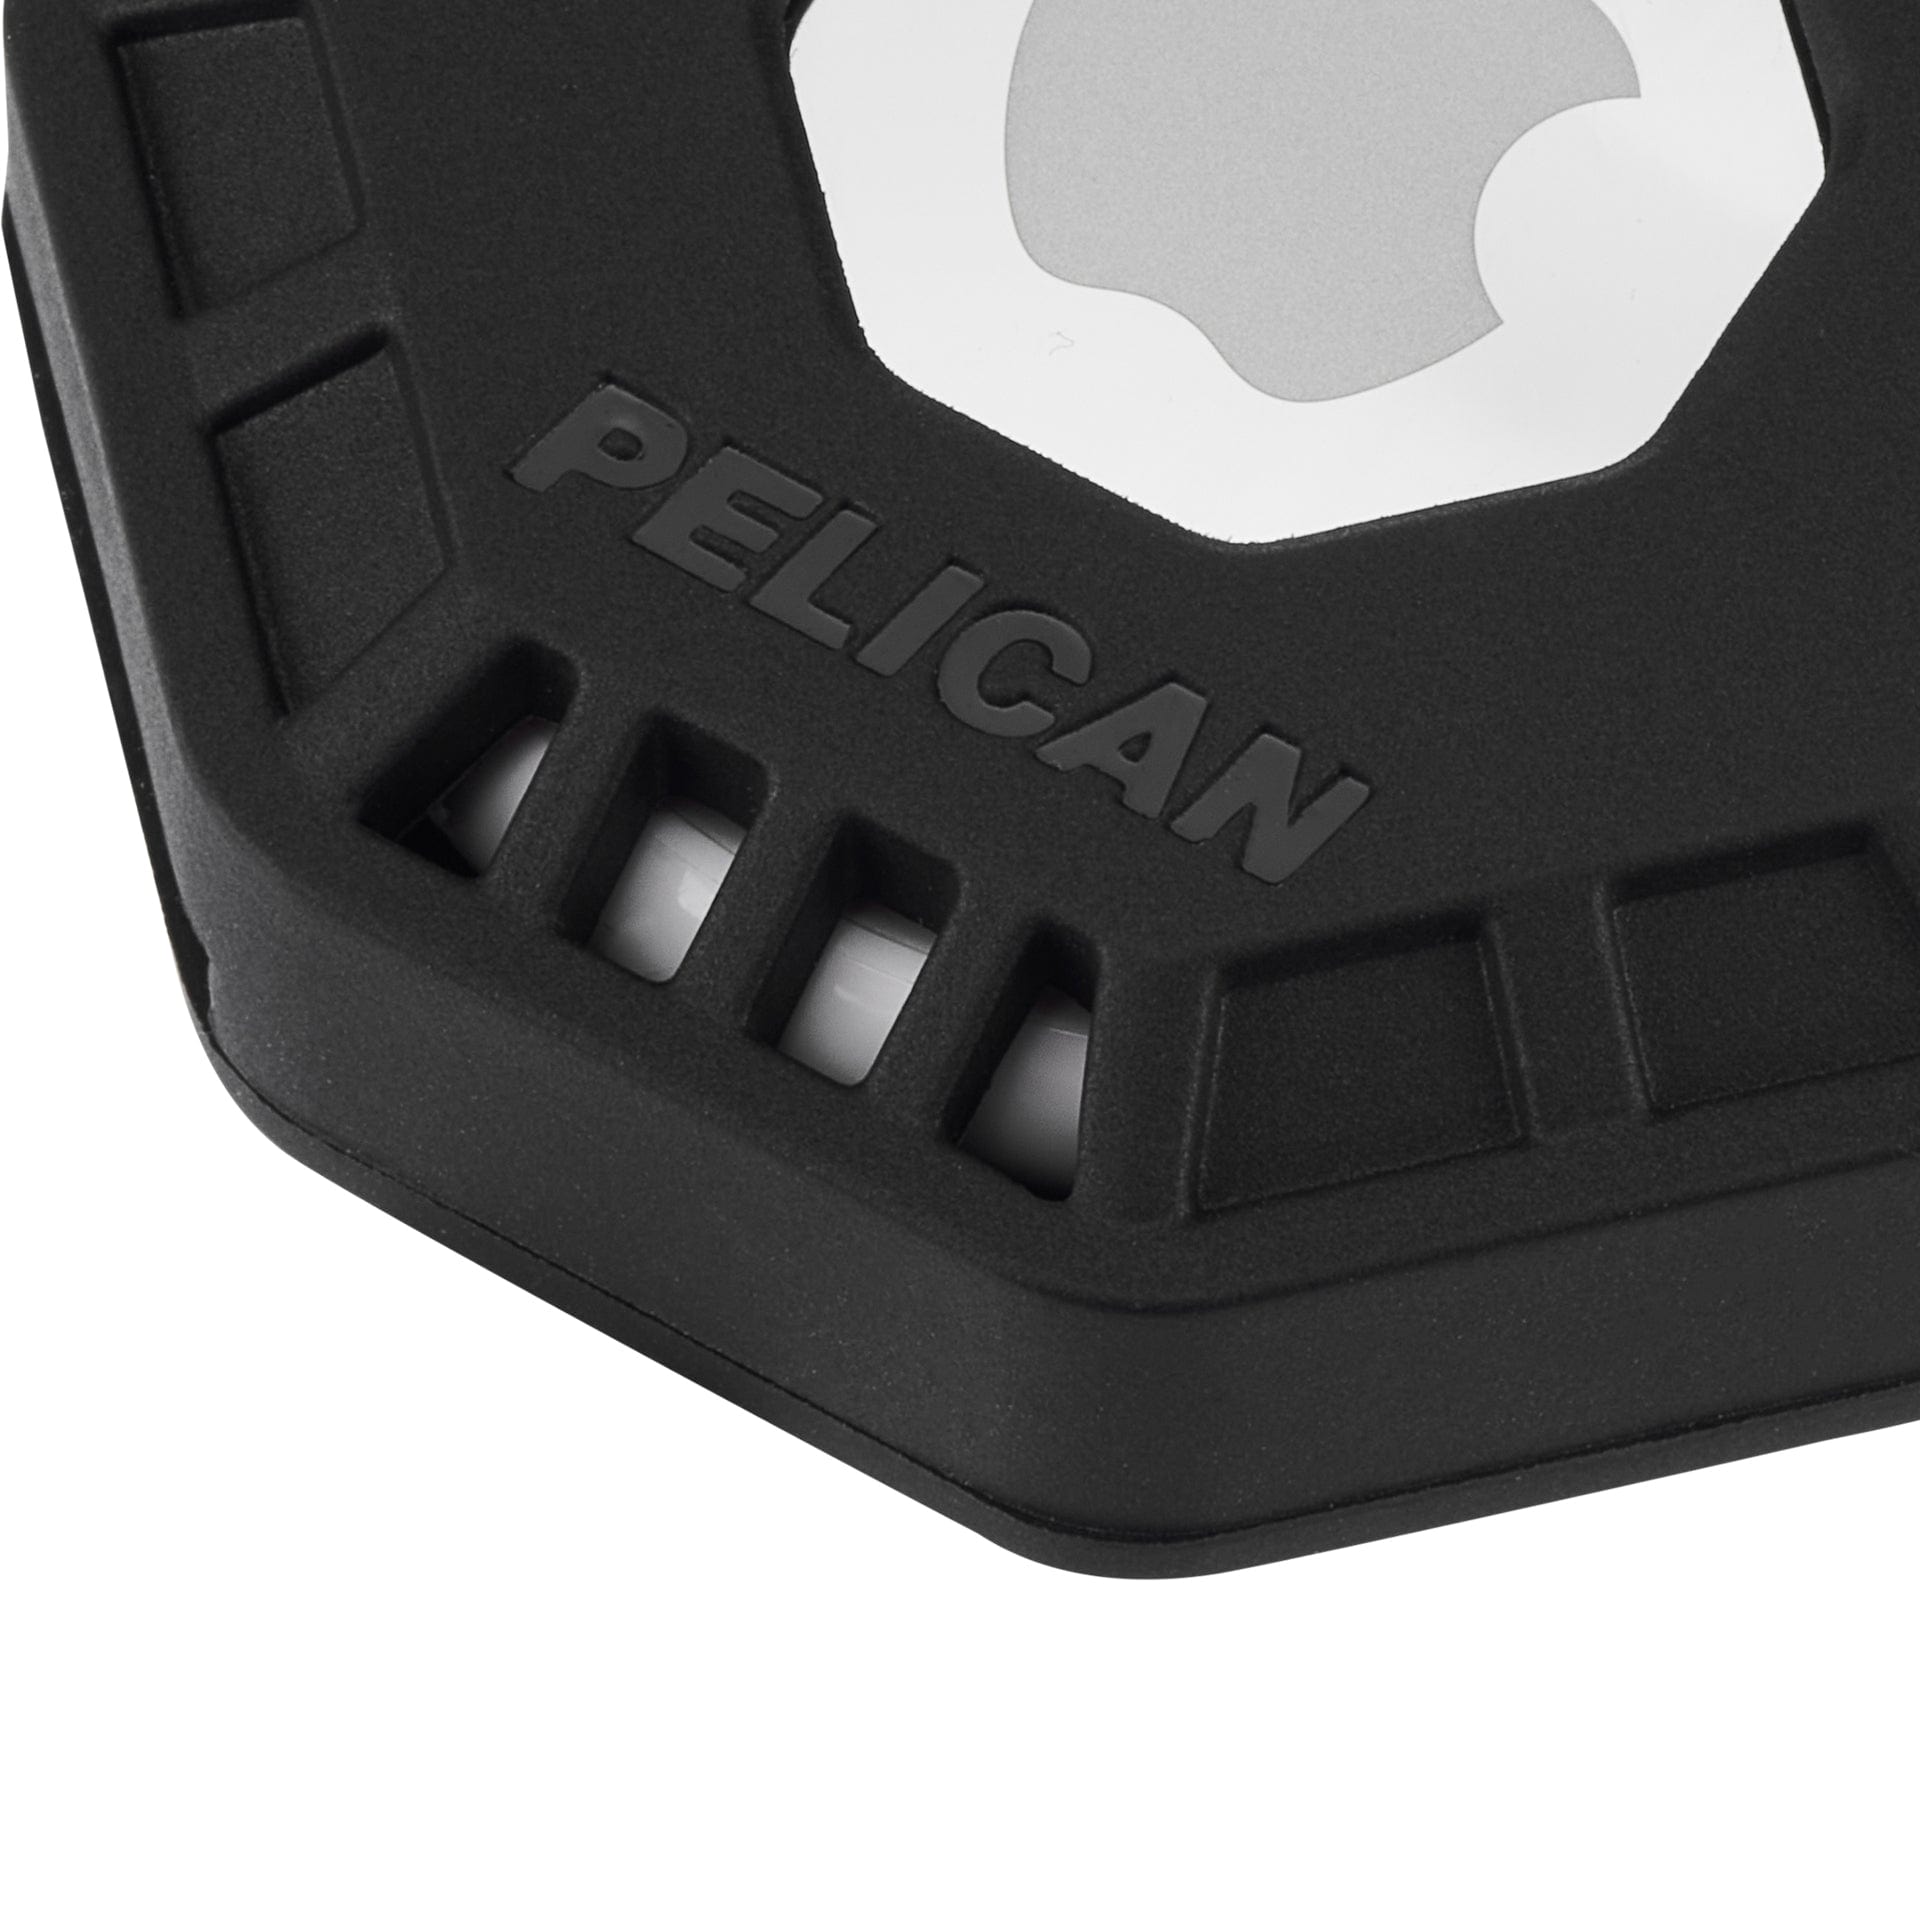 Pelican Adventurer AirTag Sticker Mount 4 Pack (Black) - AirTag Case